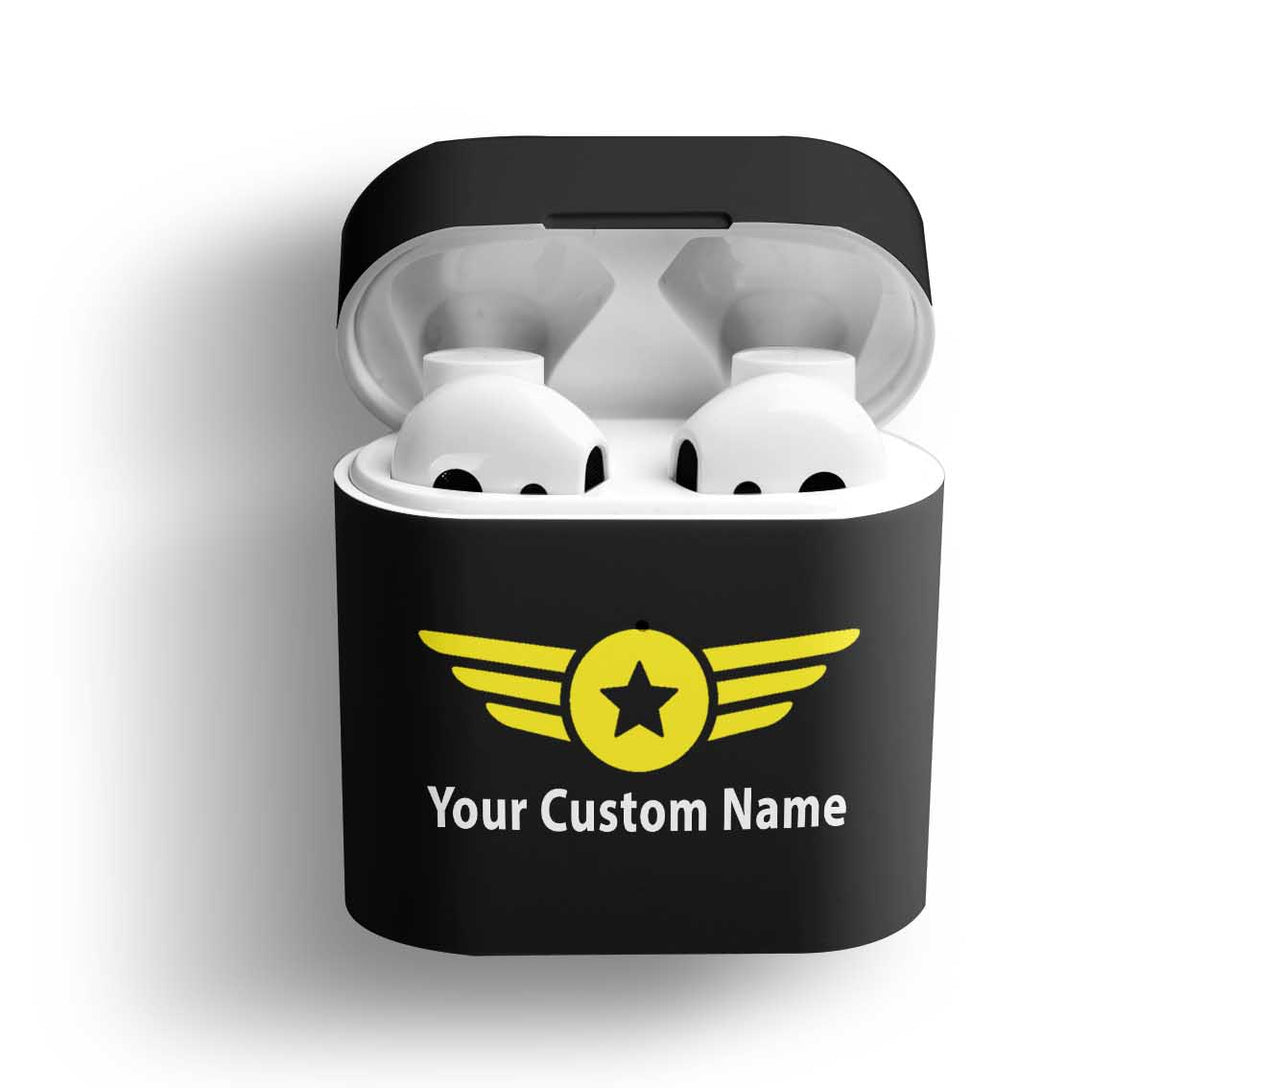 Custom Name (Badge 4) Designed AirPods Cases